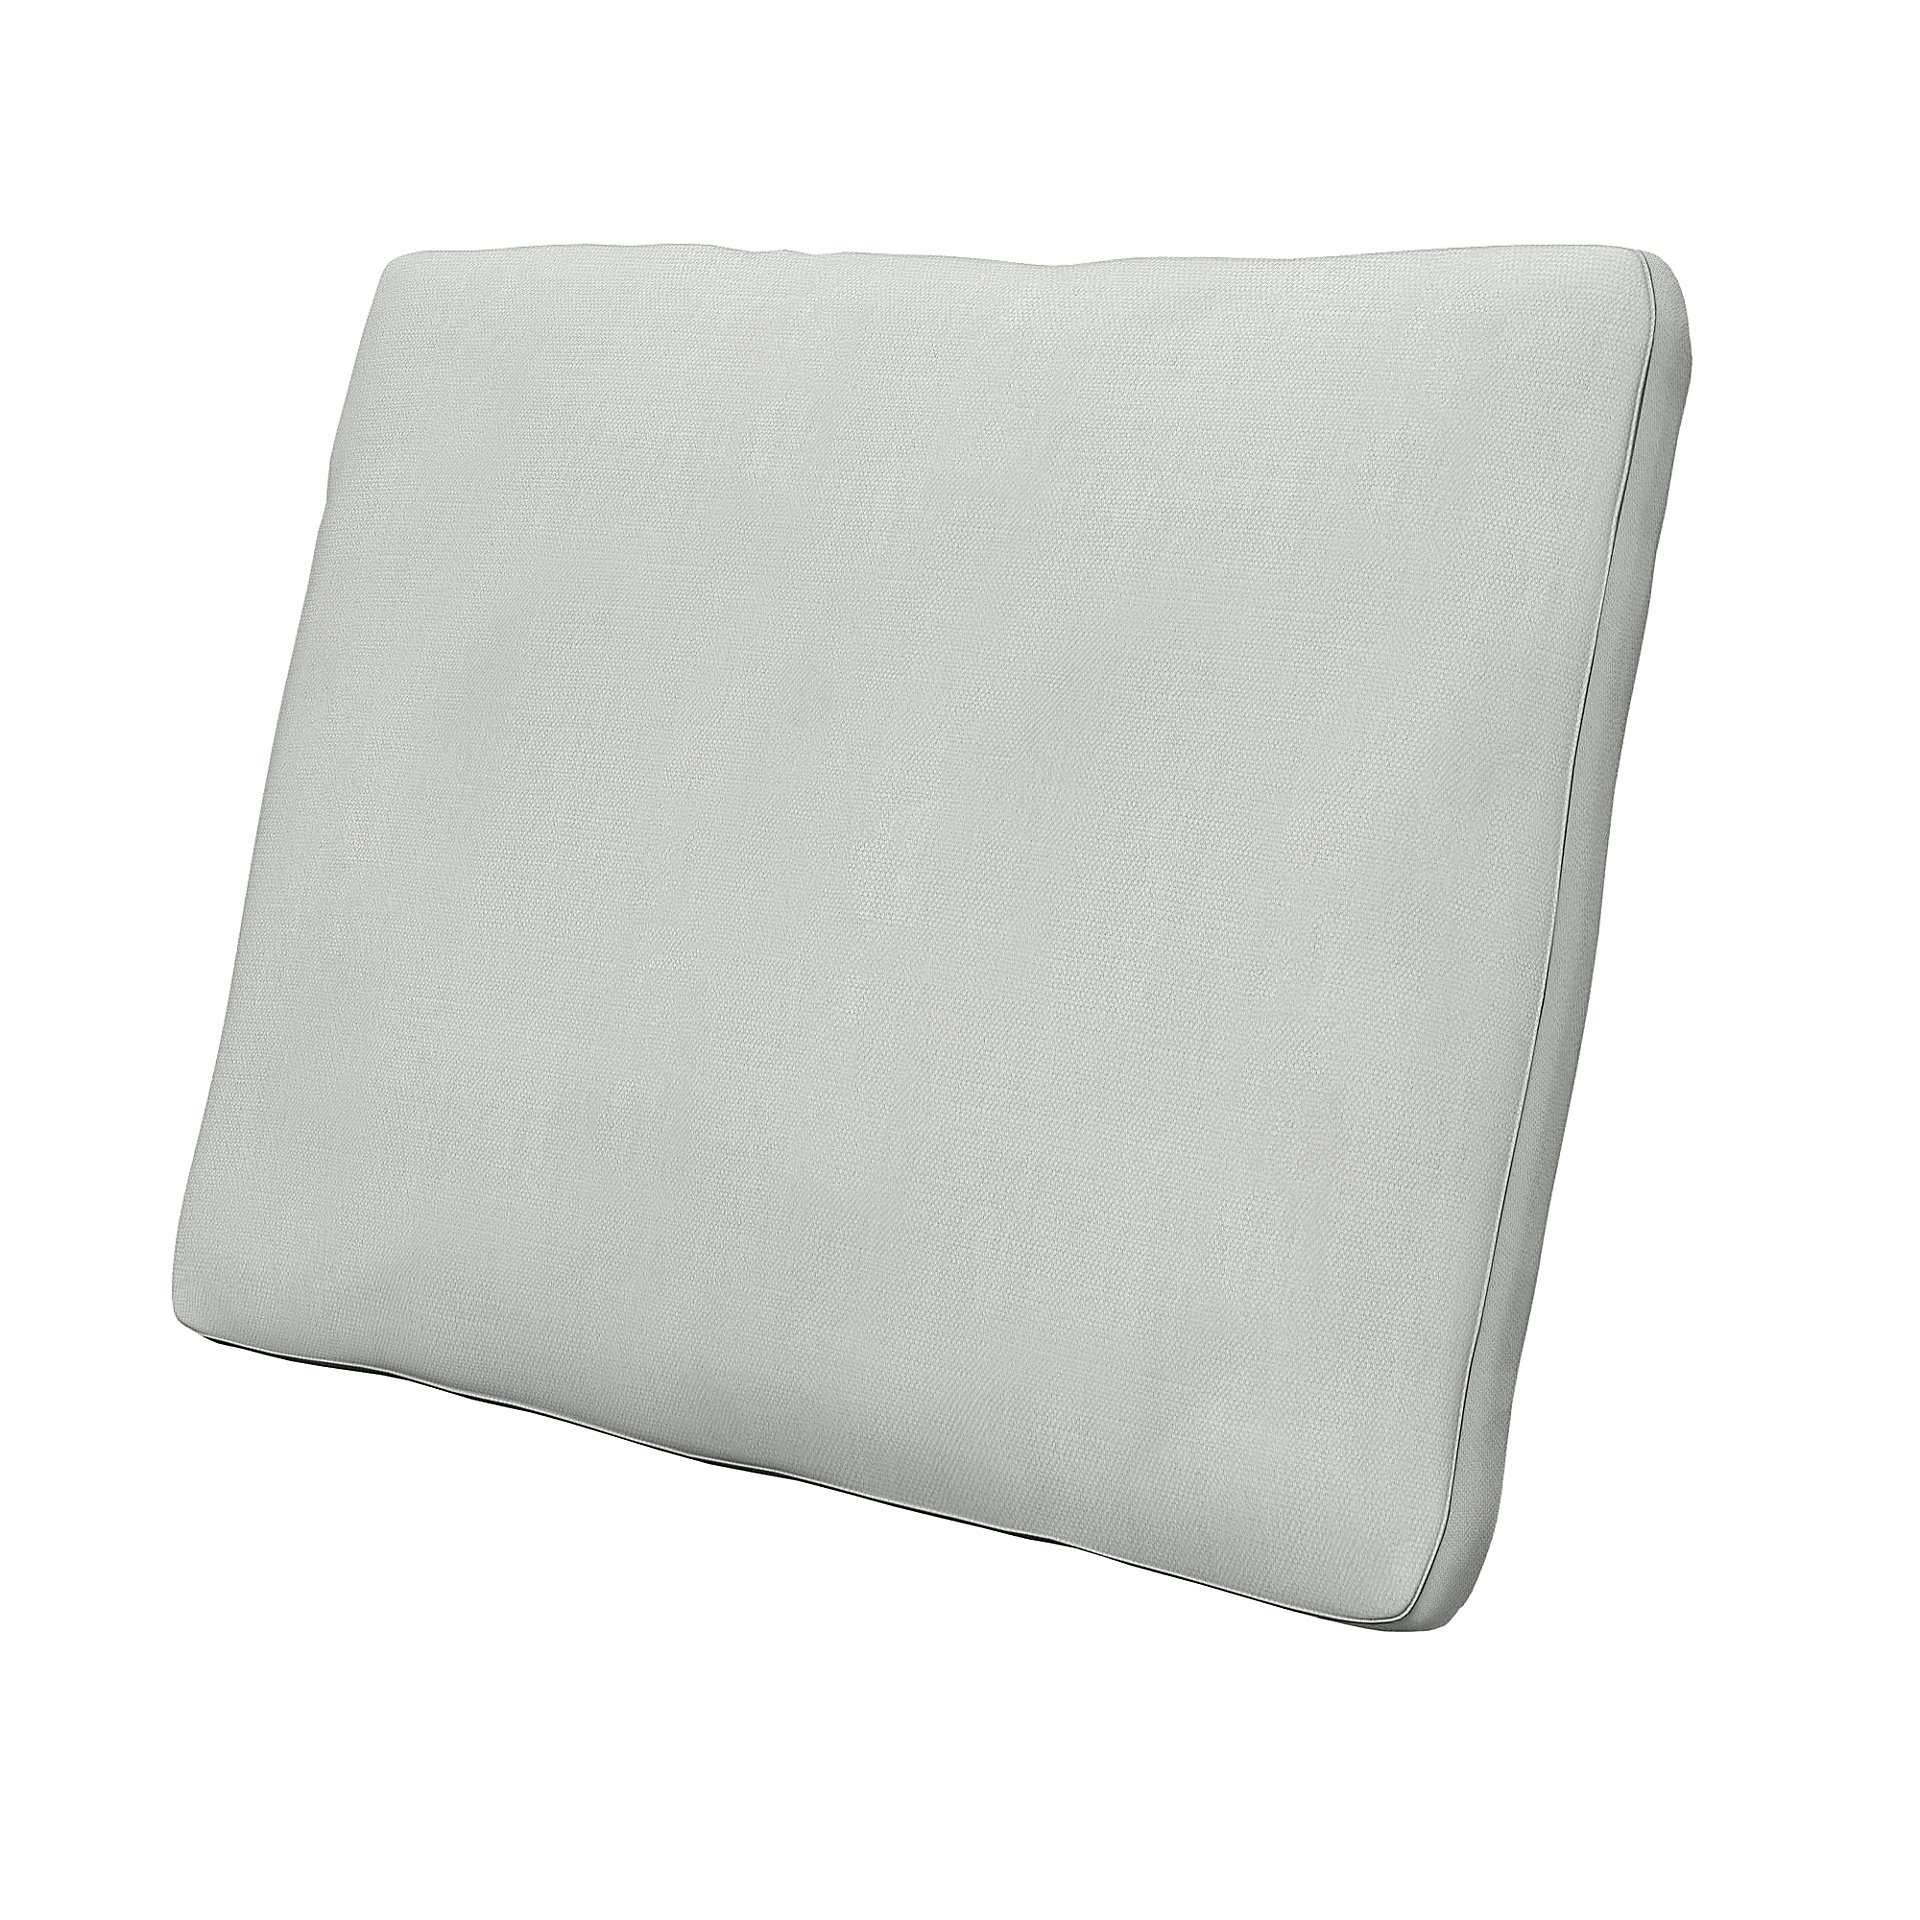 IKEA - Cushion Cover Karlstad 58x48x5 cm, Silver Grey, Linen - Bemz